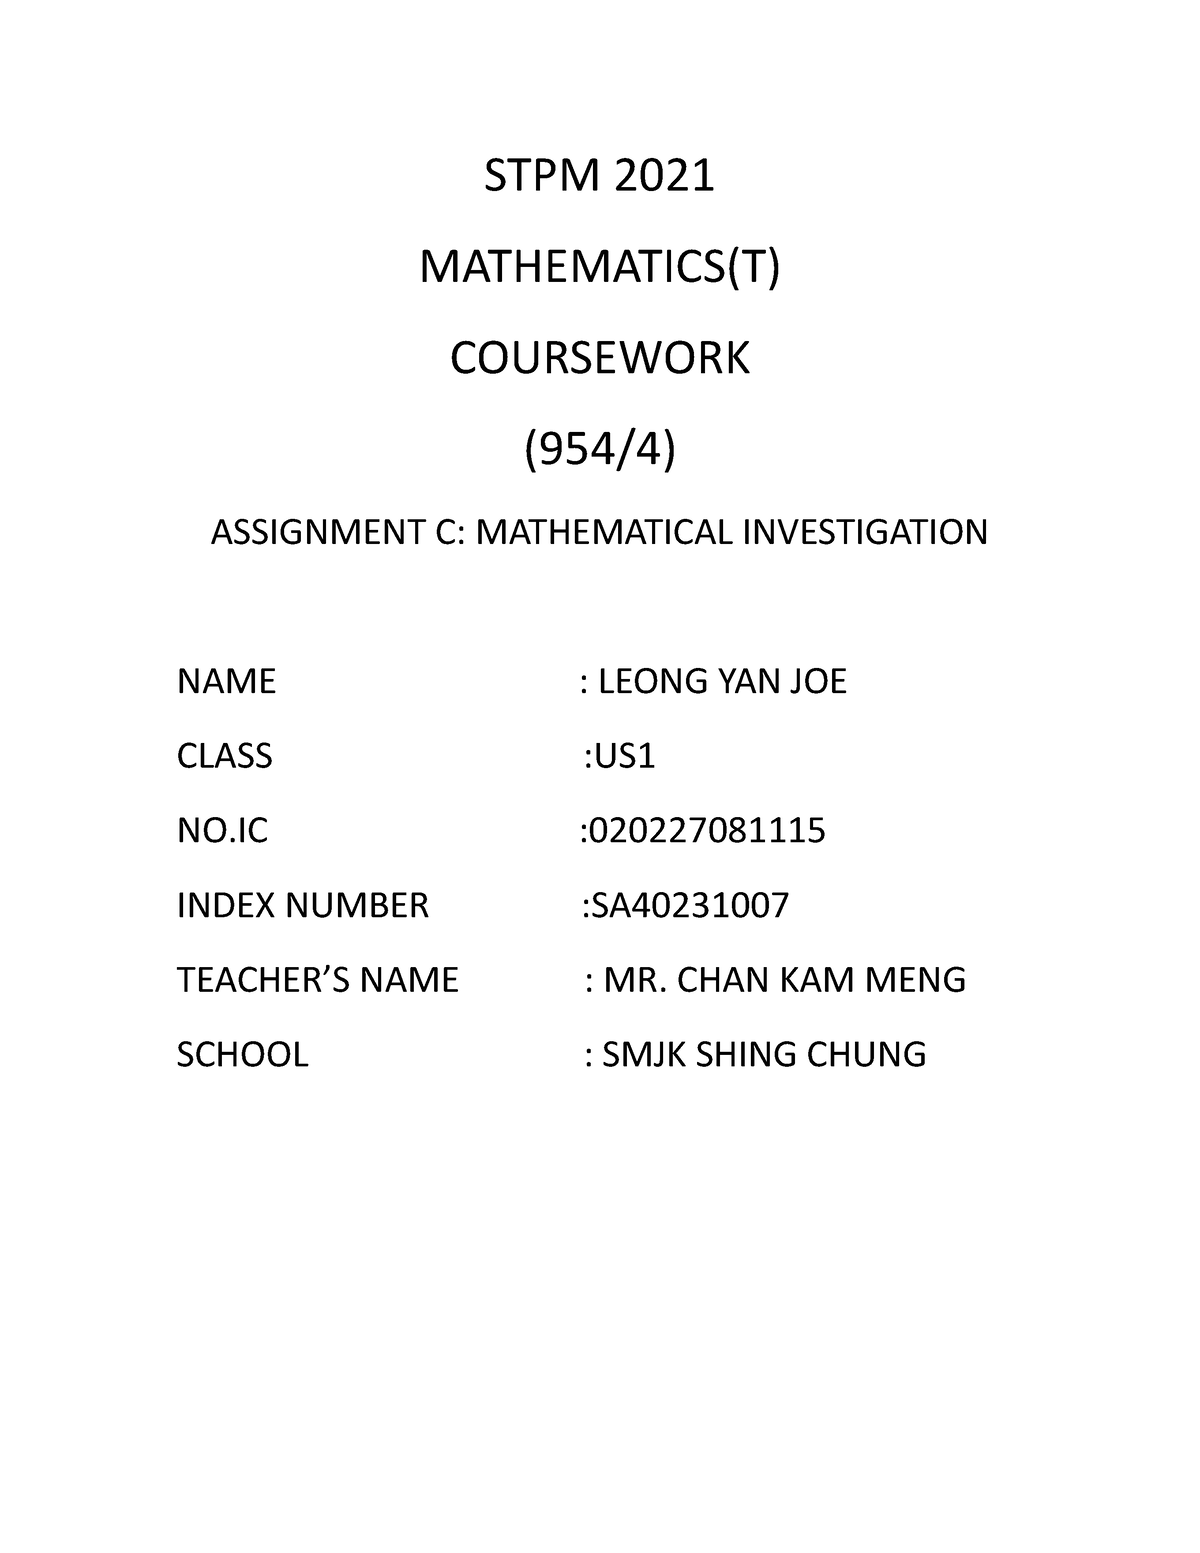 mathematics m coursework stpm 2020